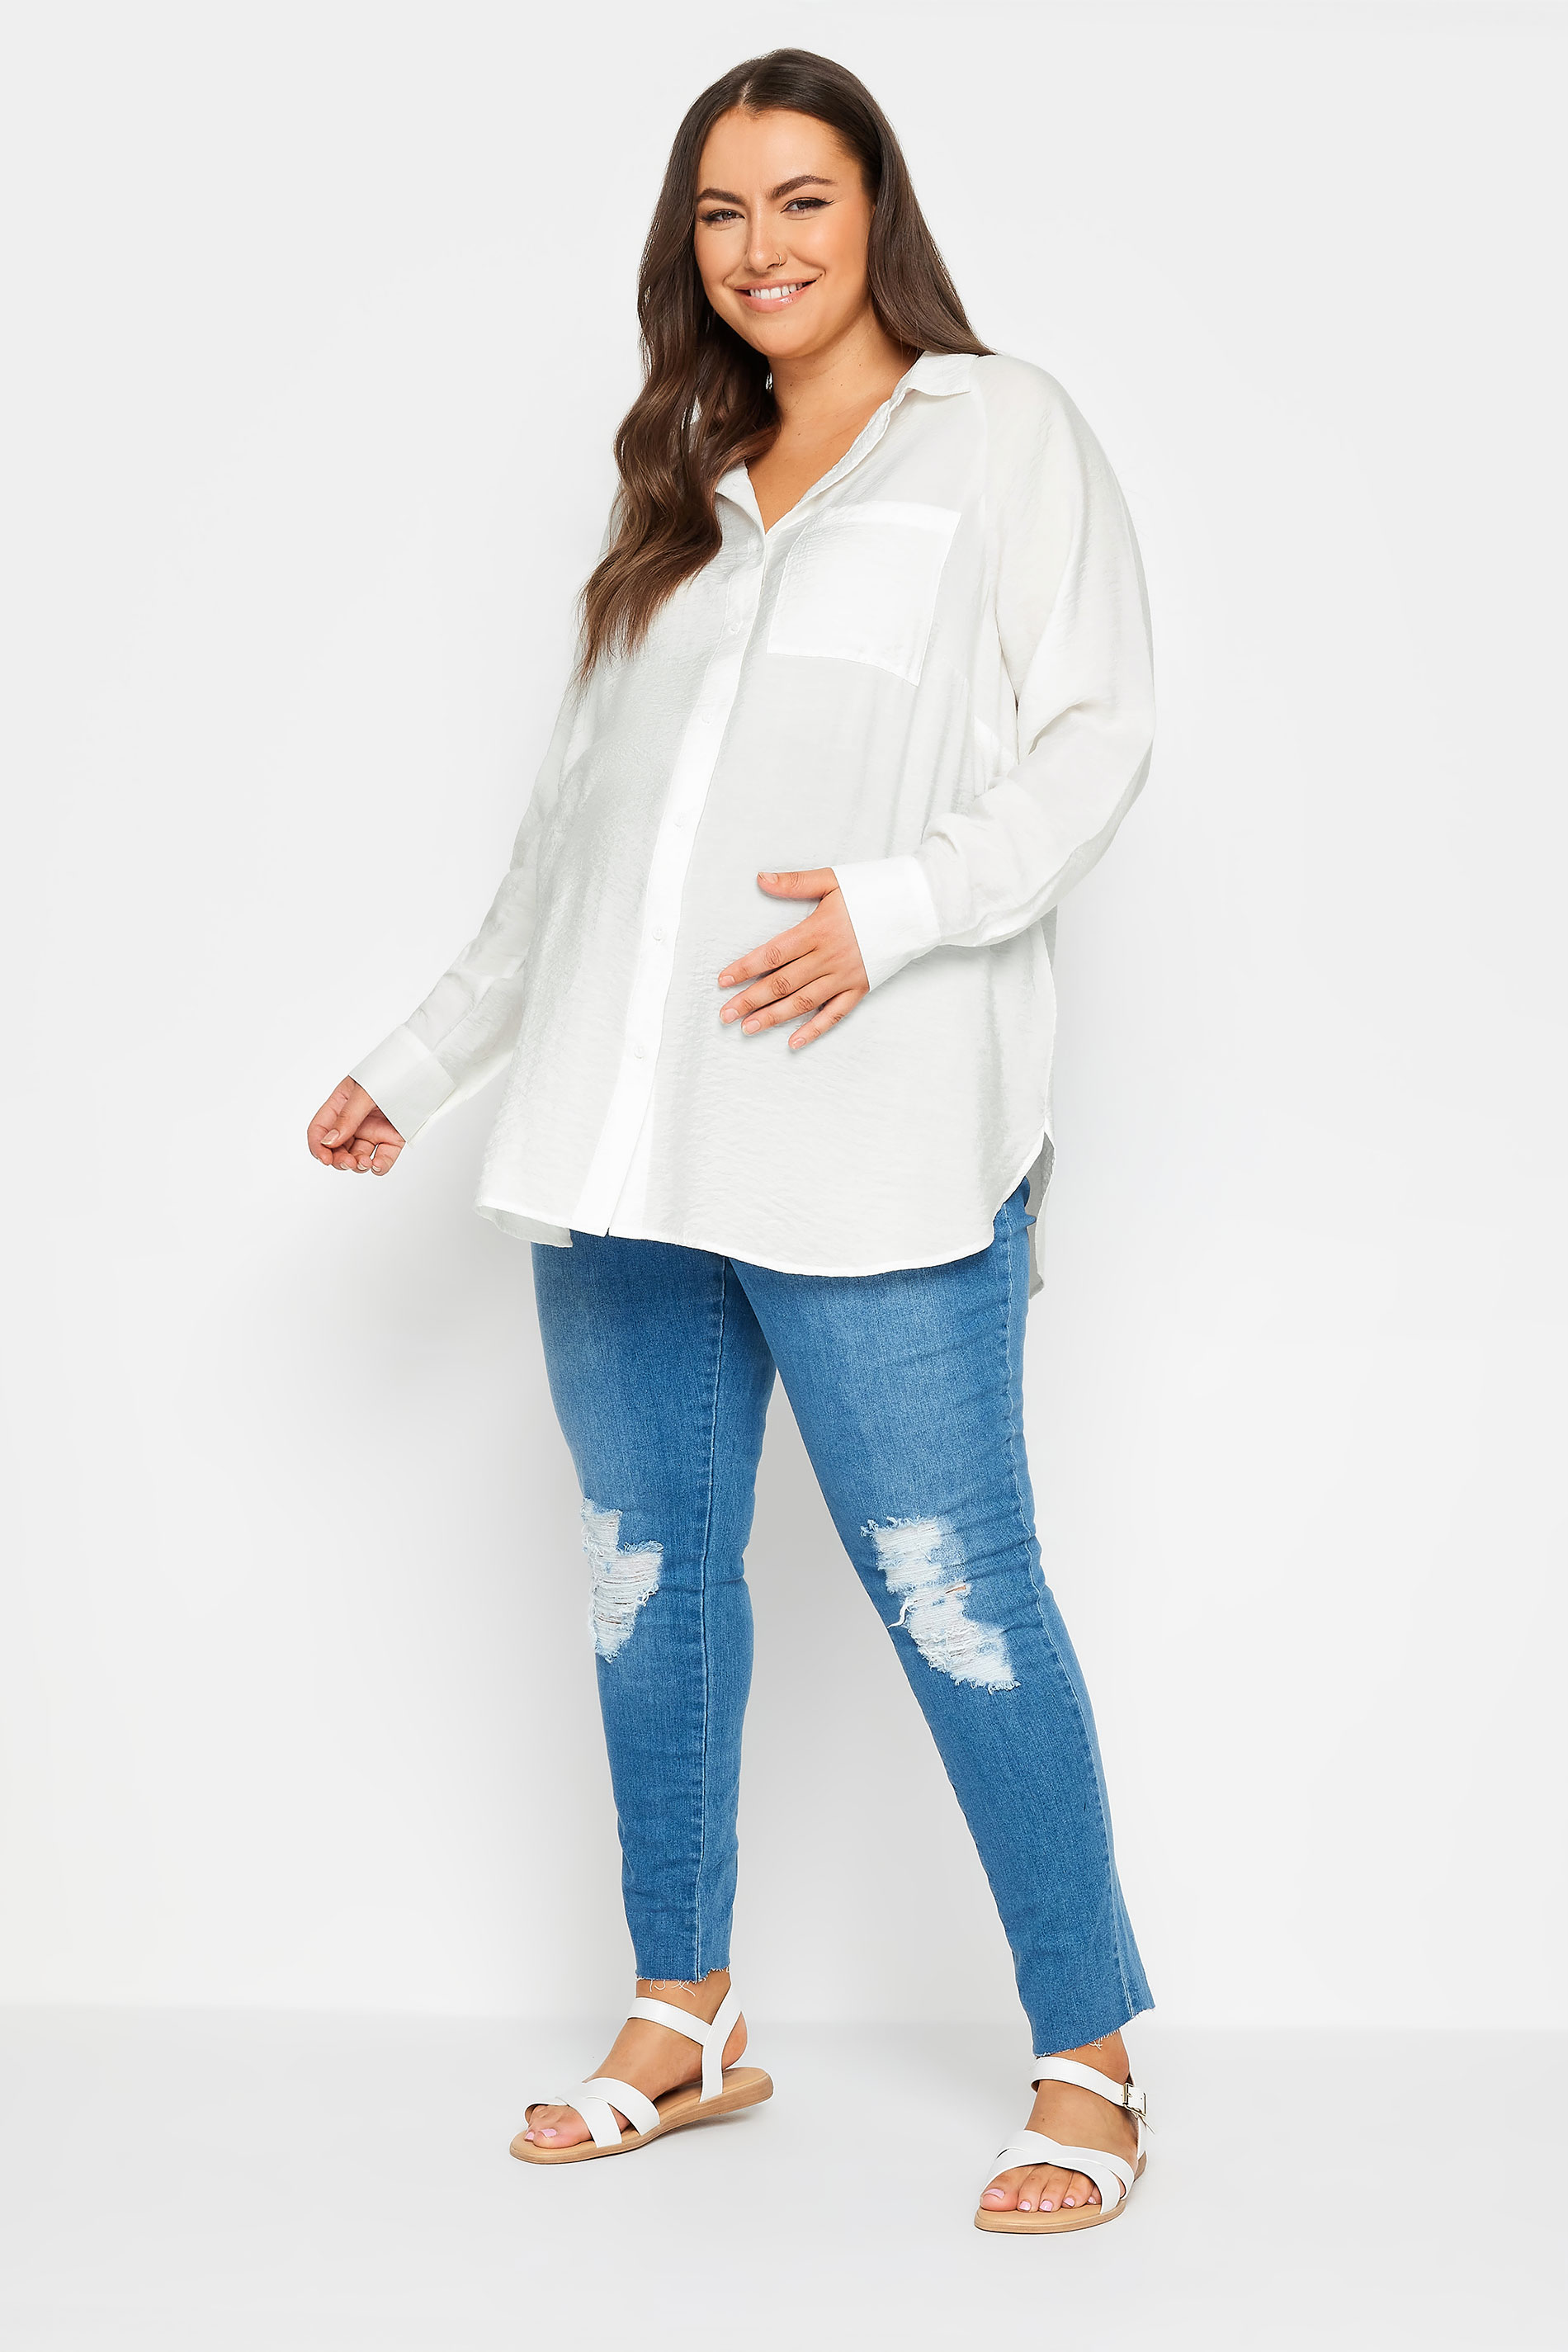 BUMP IT UP MATERNITY Plus Size White Pocket Shirt | Yours Clothing 3